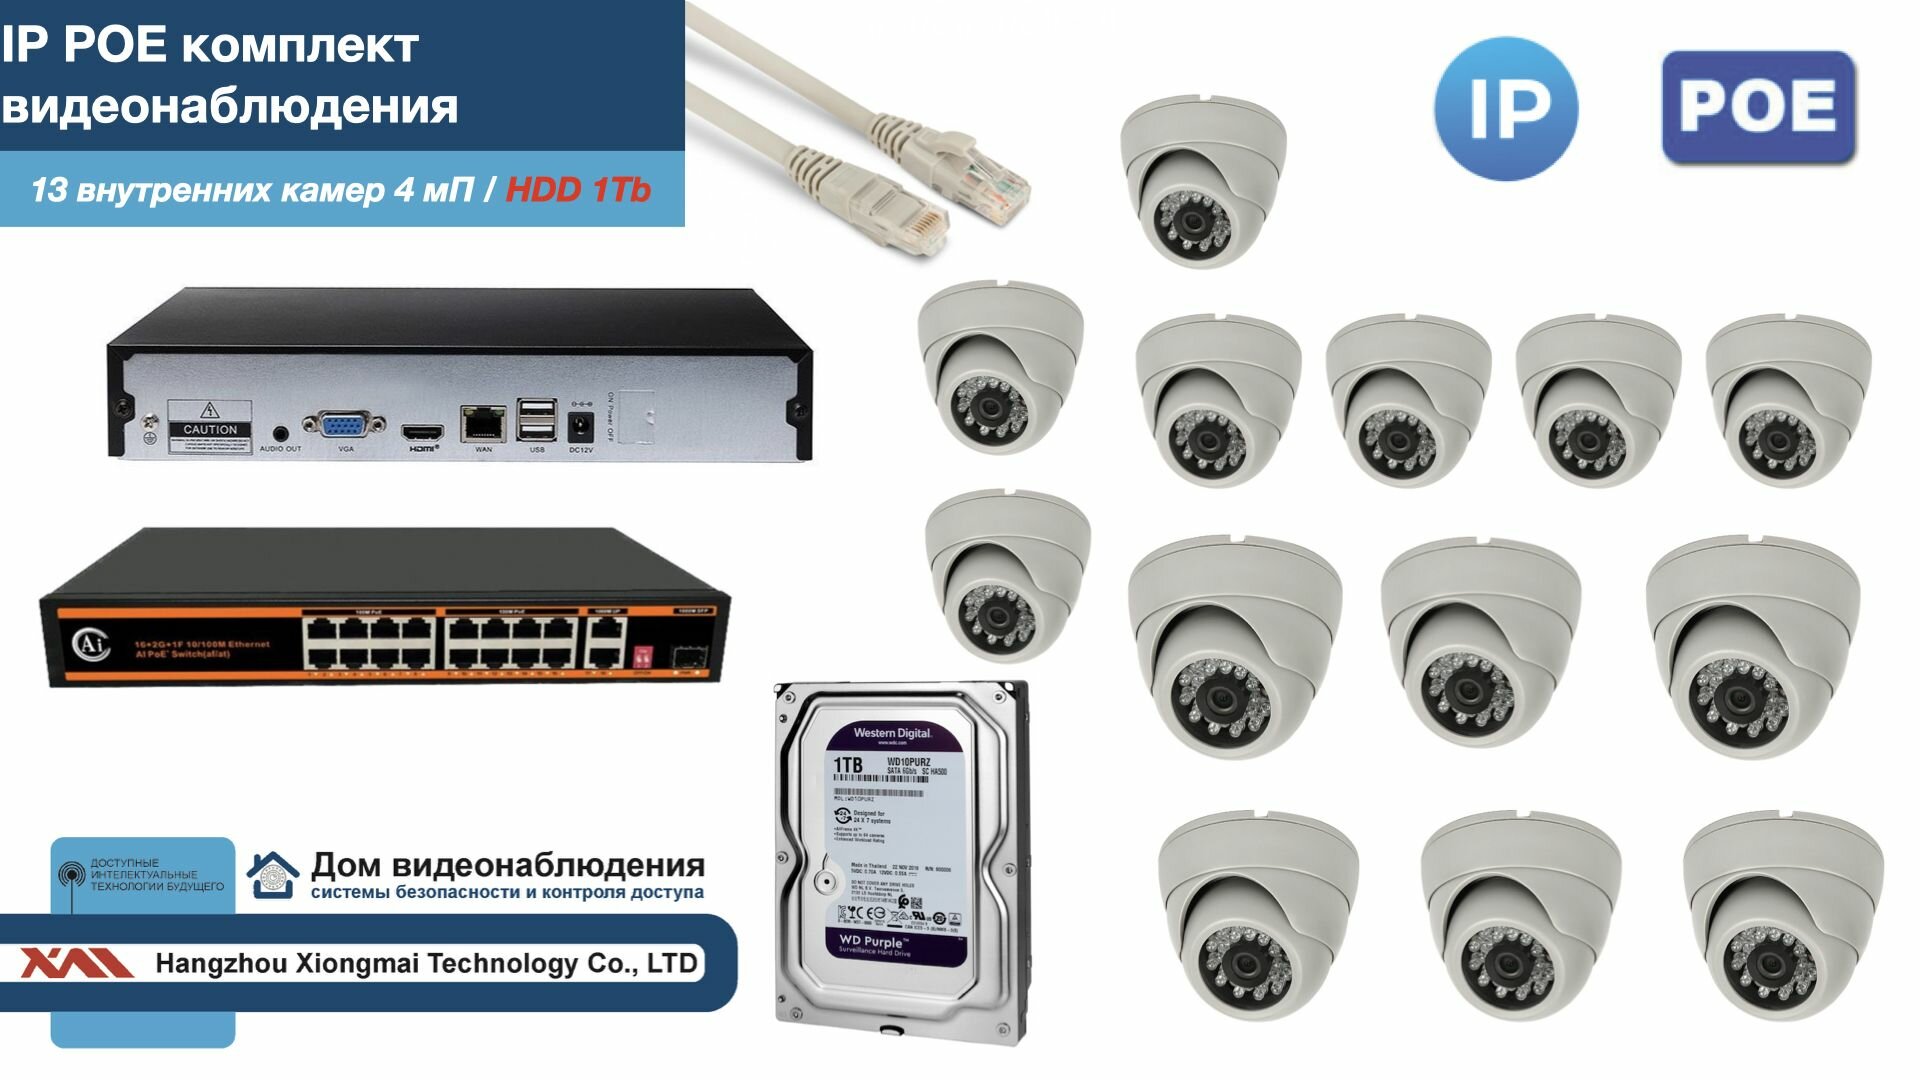 Полный IP POE комплект видеонаблюдения на 13 камер (KIT13IPPOE300W4MP-HDD1Tb)